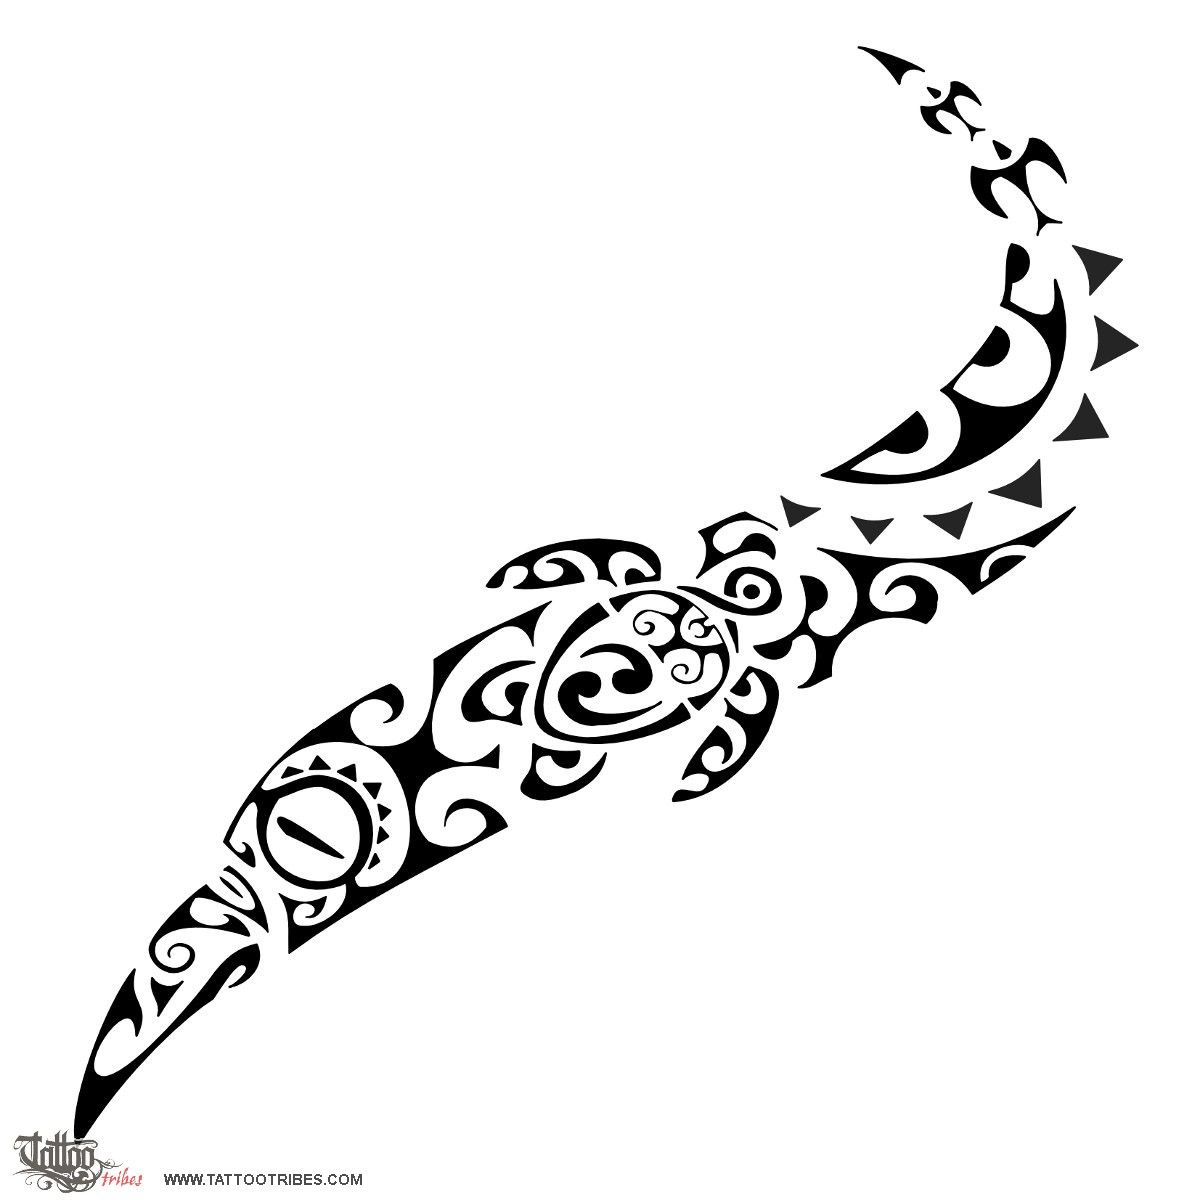 Maori Tattoo Mit Schriftzug - KibrisPDR